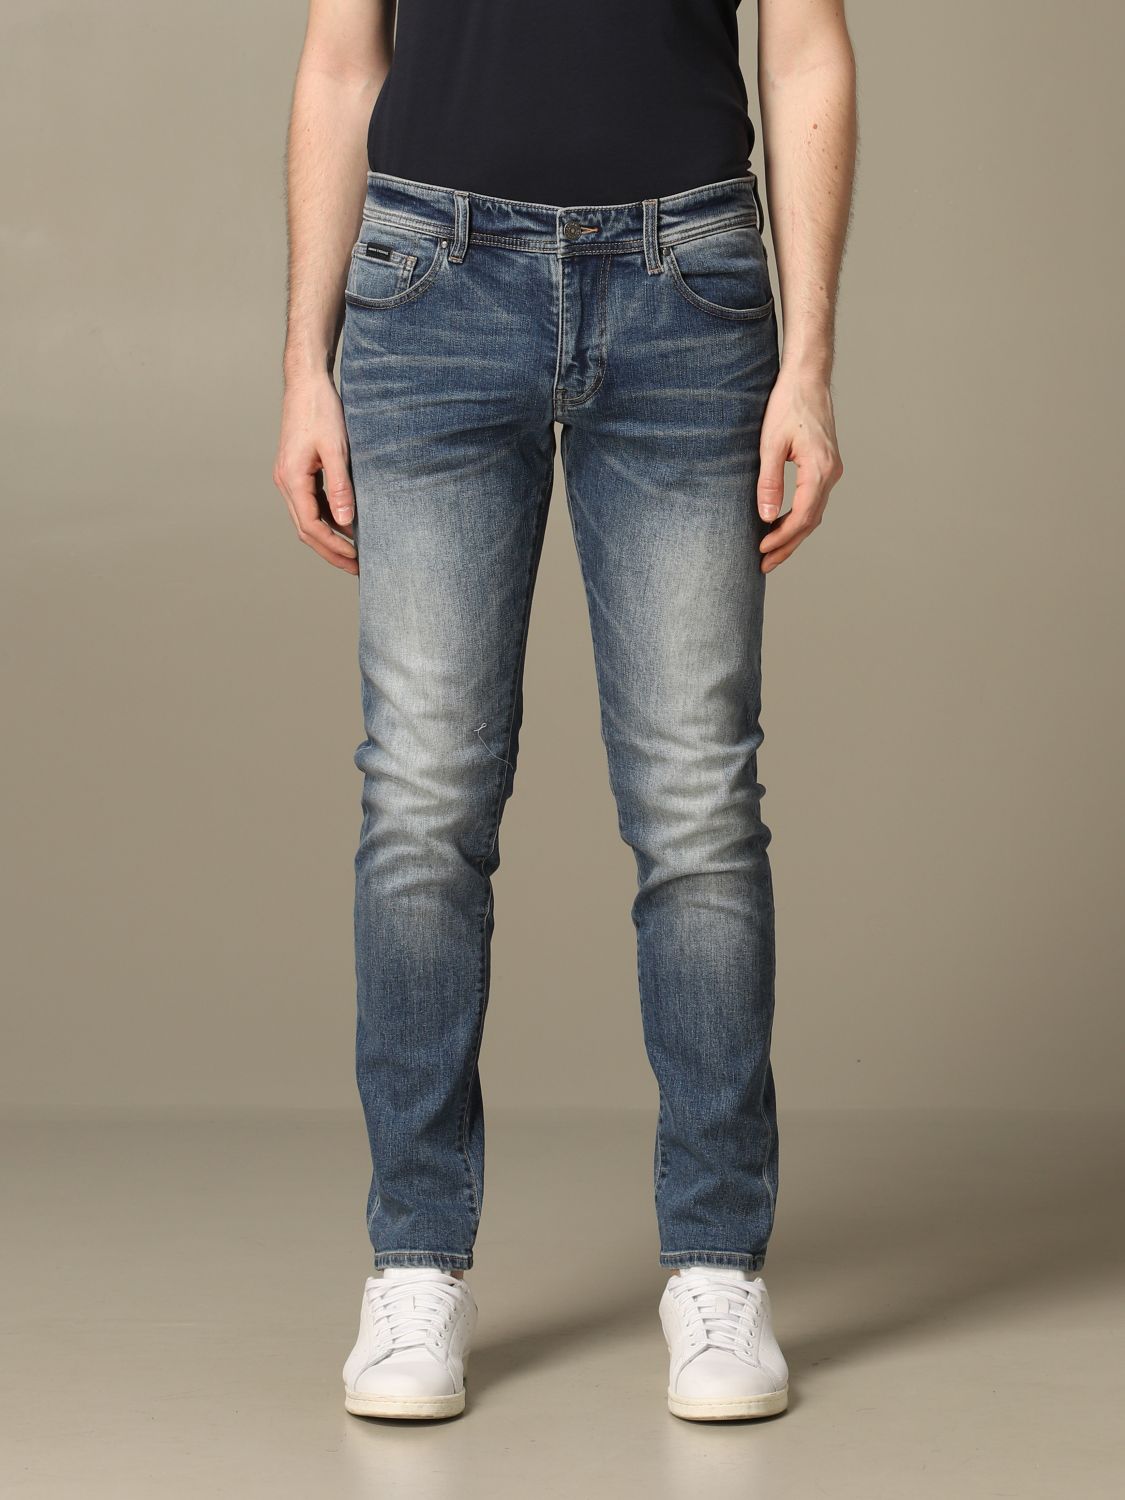 Armani Exchange Outlet: 5-pocket jeans - Denim | Armani Exchange jeans  3HZJ14 Z1KUZ online on 